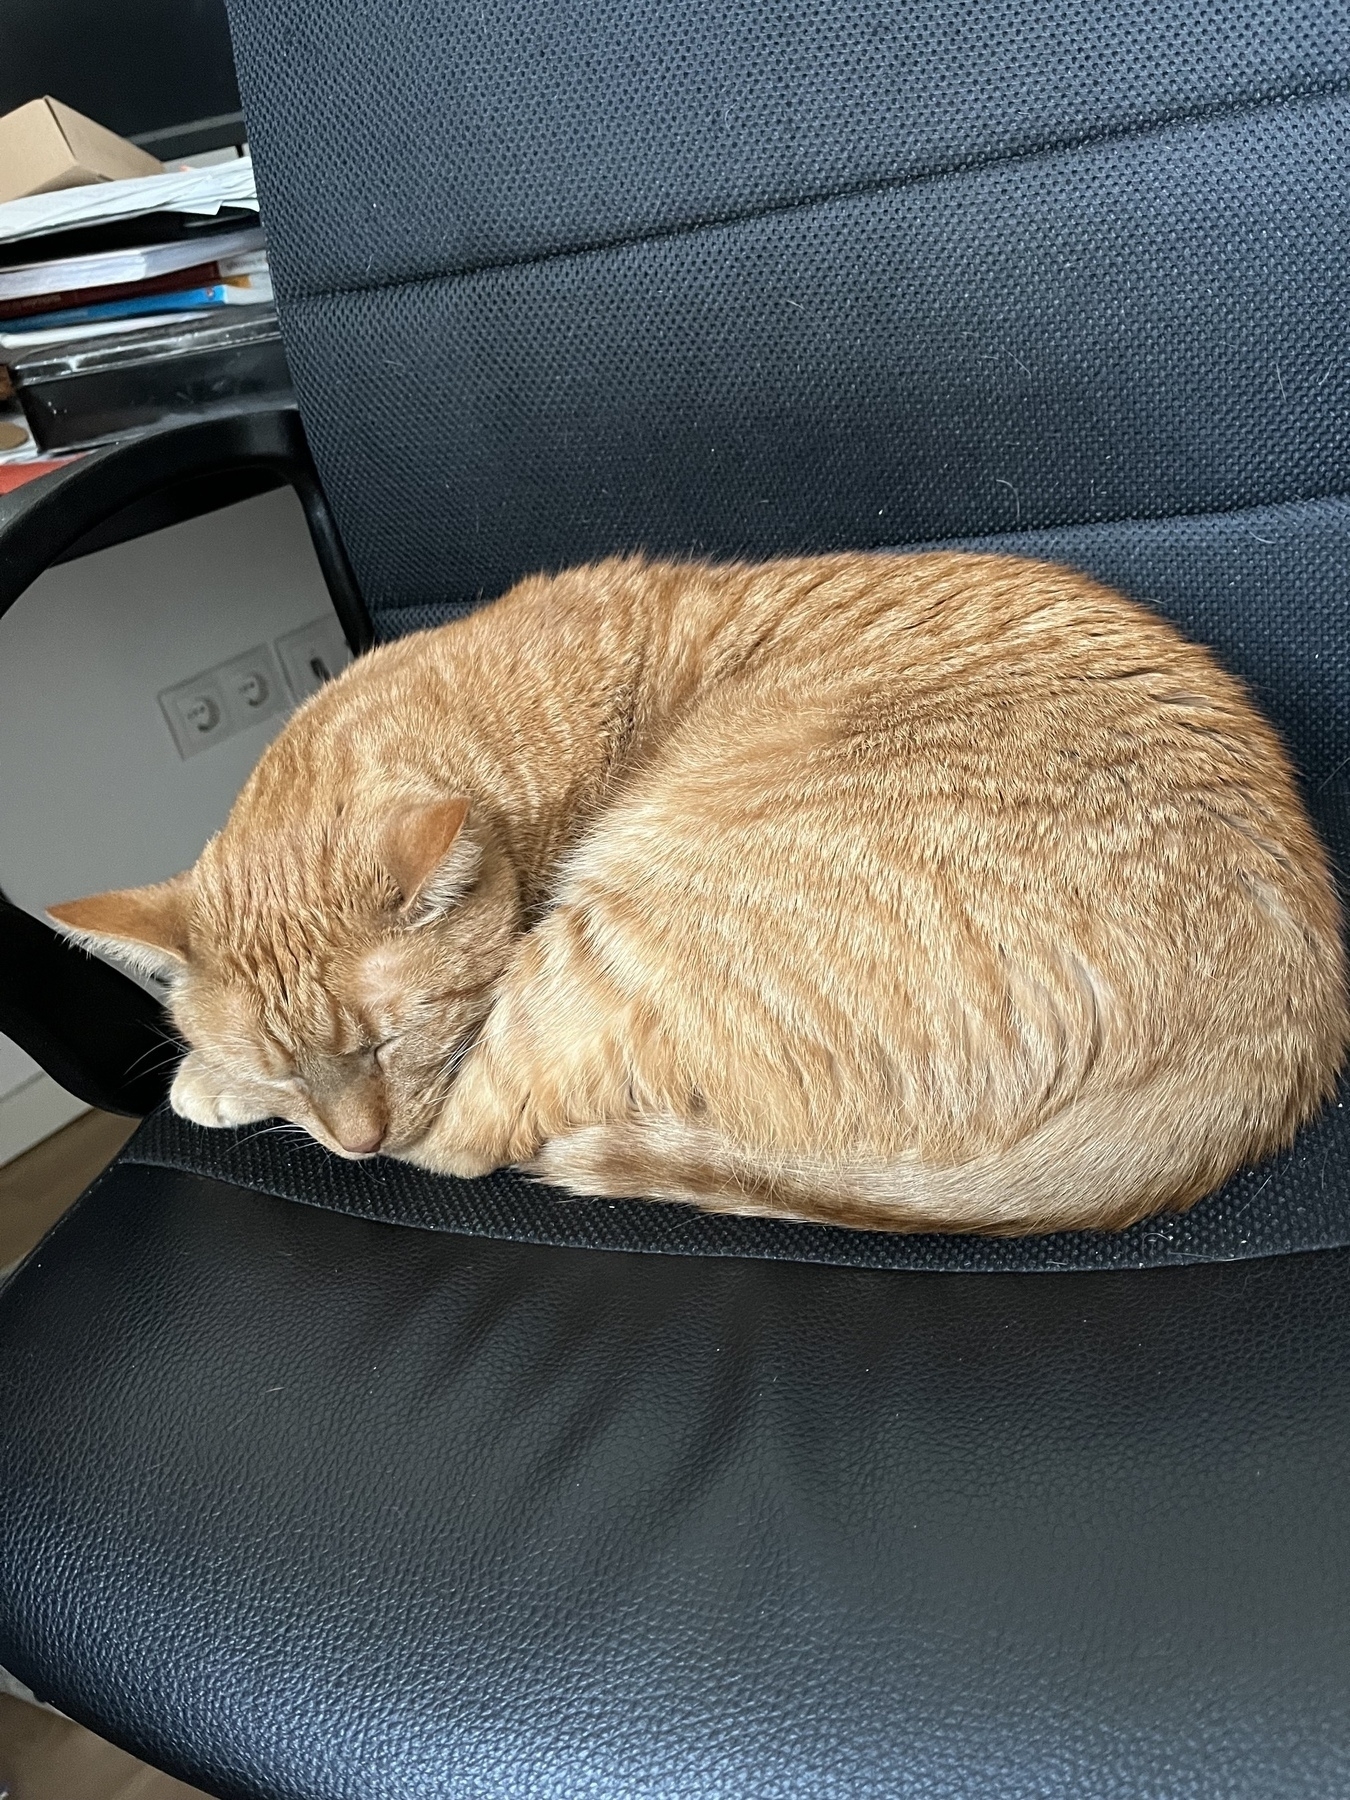 Tarō, the family’s tomcat, sleeping on his favorite chair